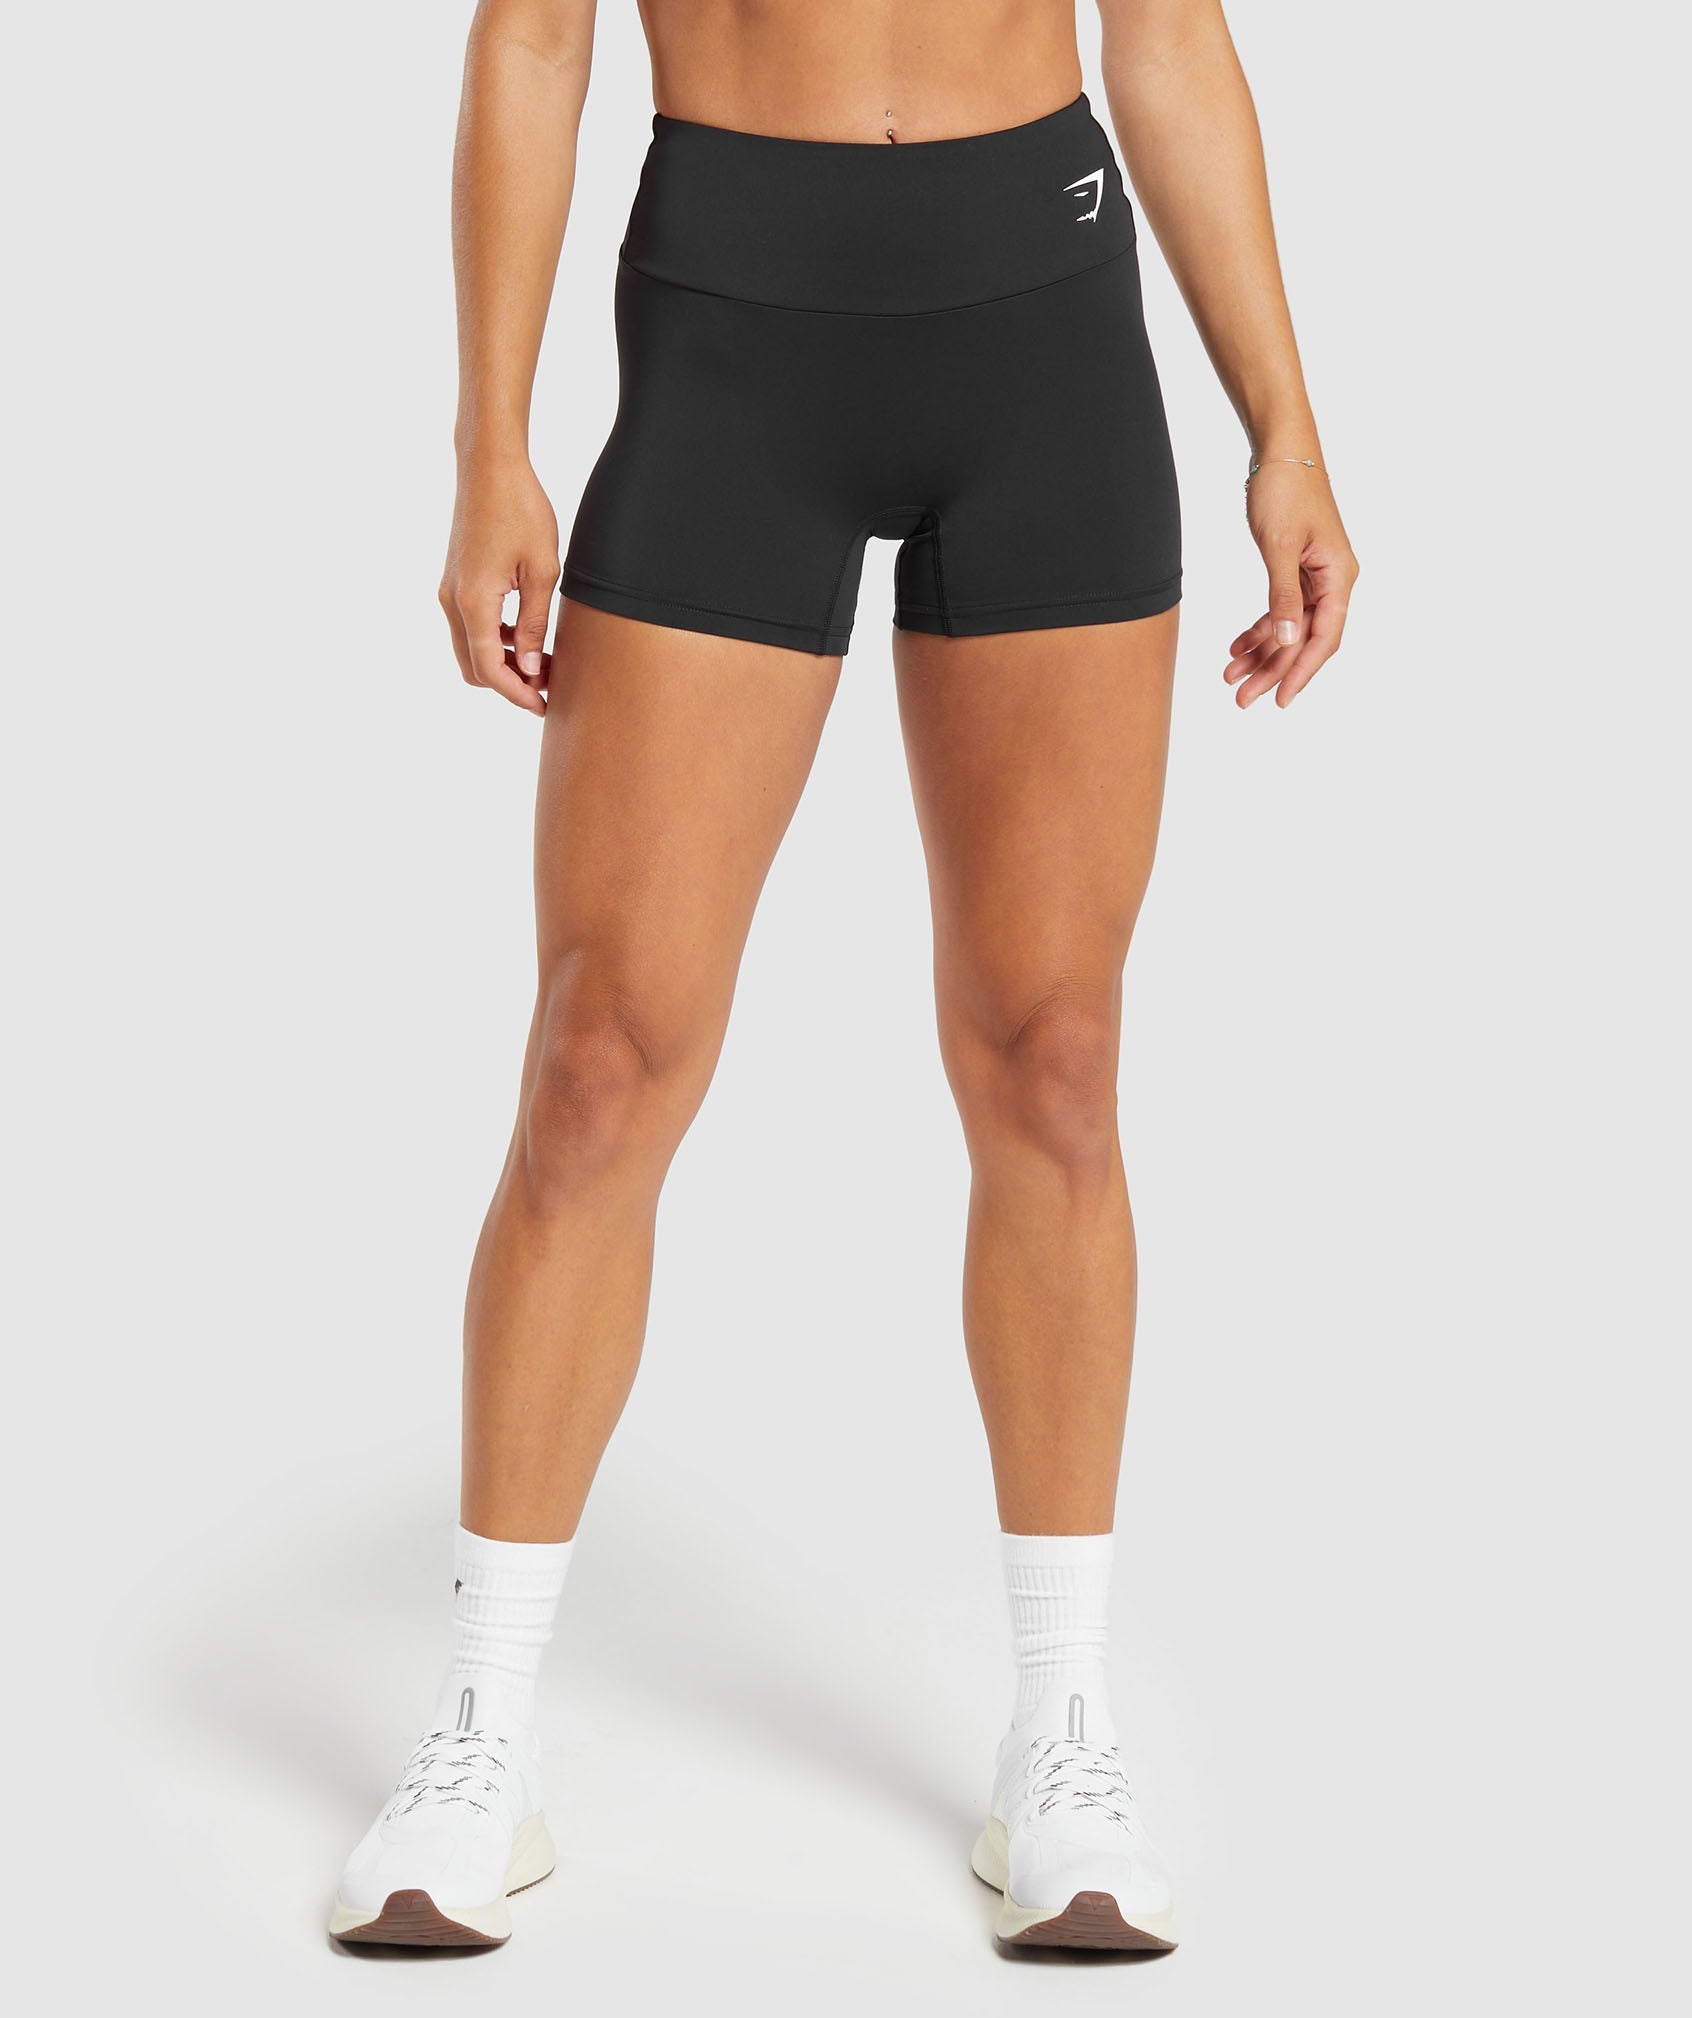 Women's Black Gym Shorts & Sports Shorts – Gymshark